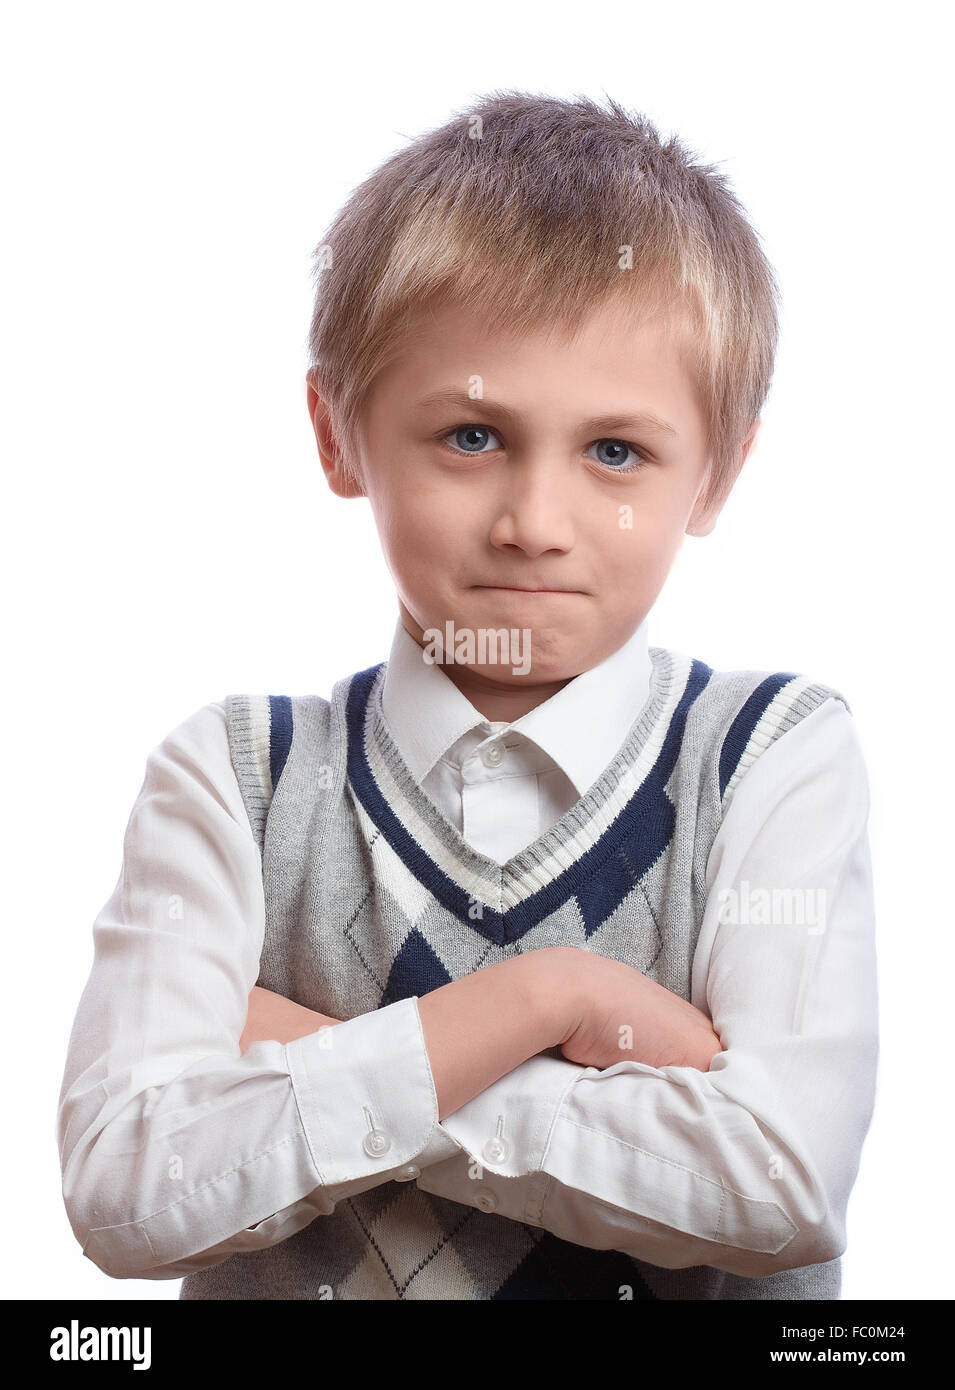 Boy on a white background Stock Photo